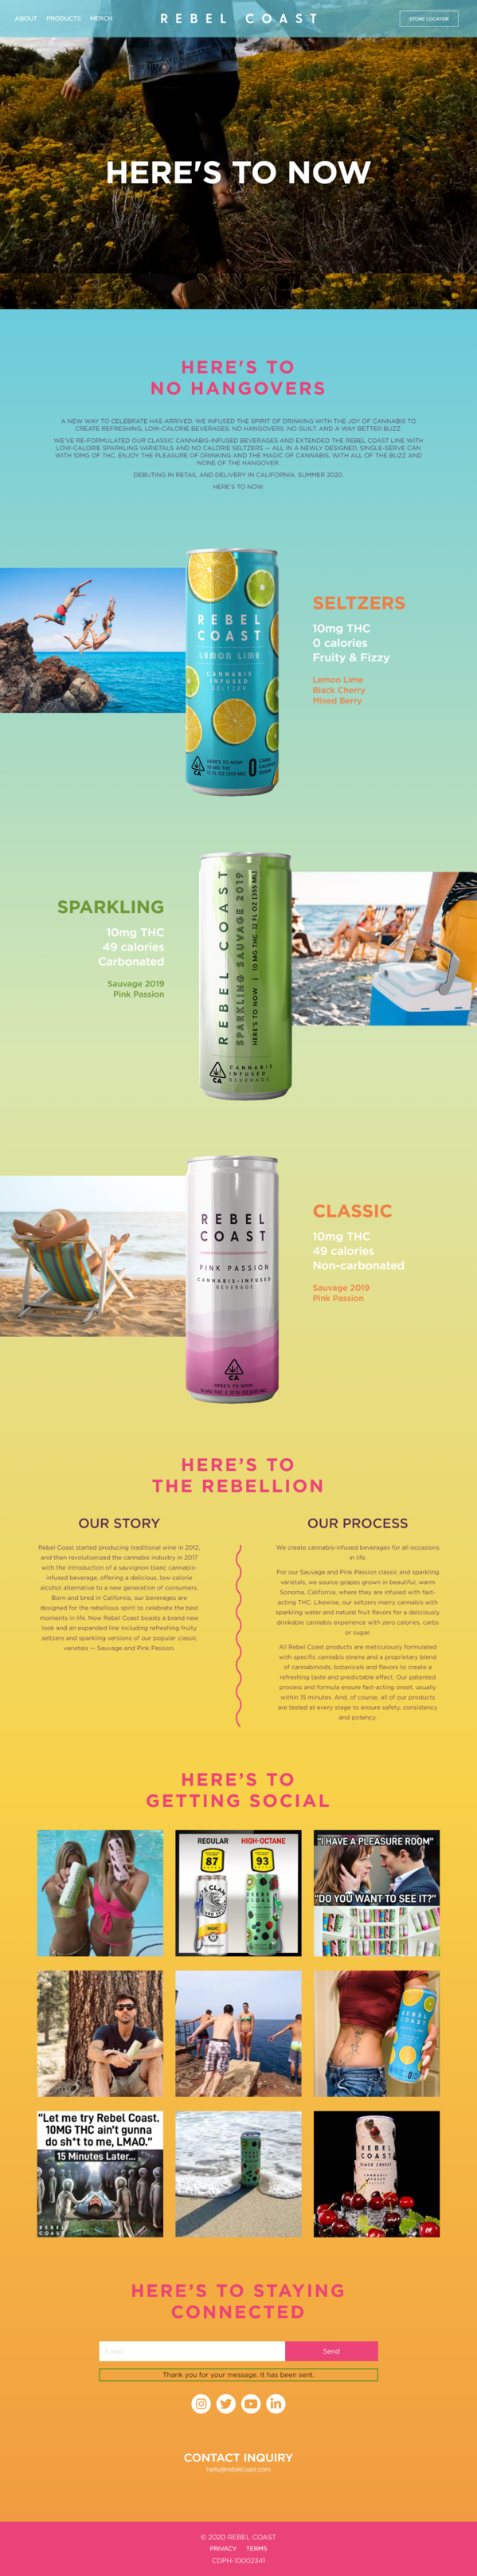 Rebel Coast - Cannabis-Infused Beverages - Home - rebelcoast.com.png